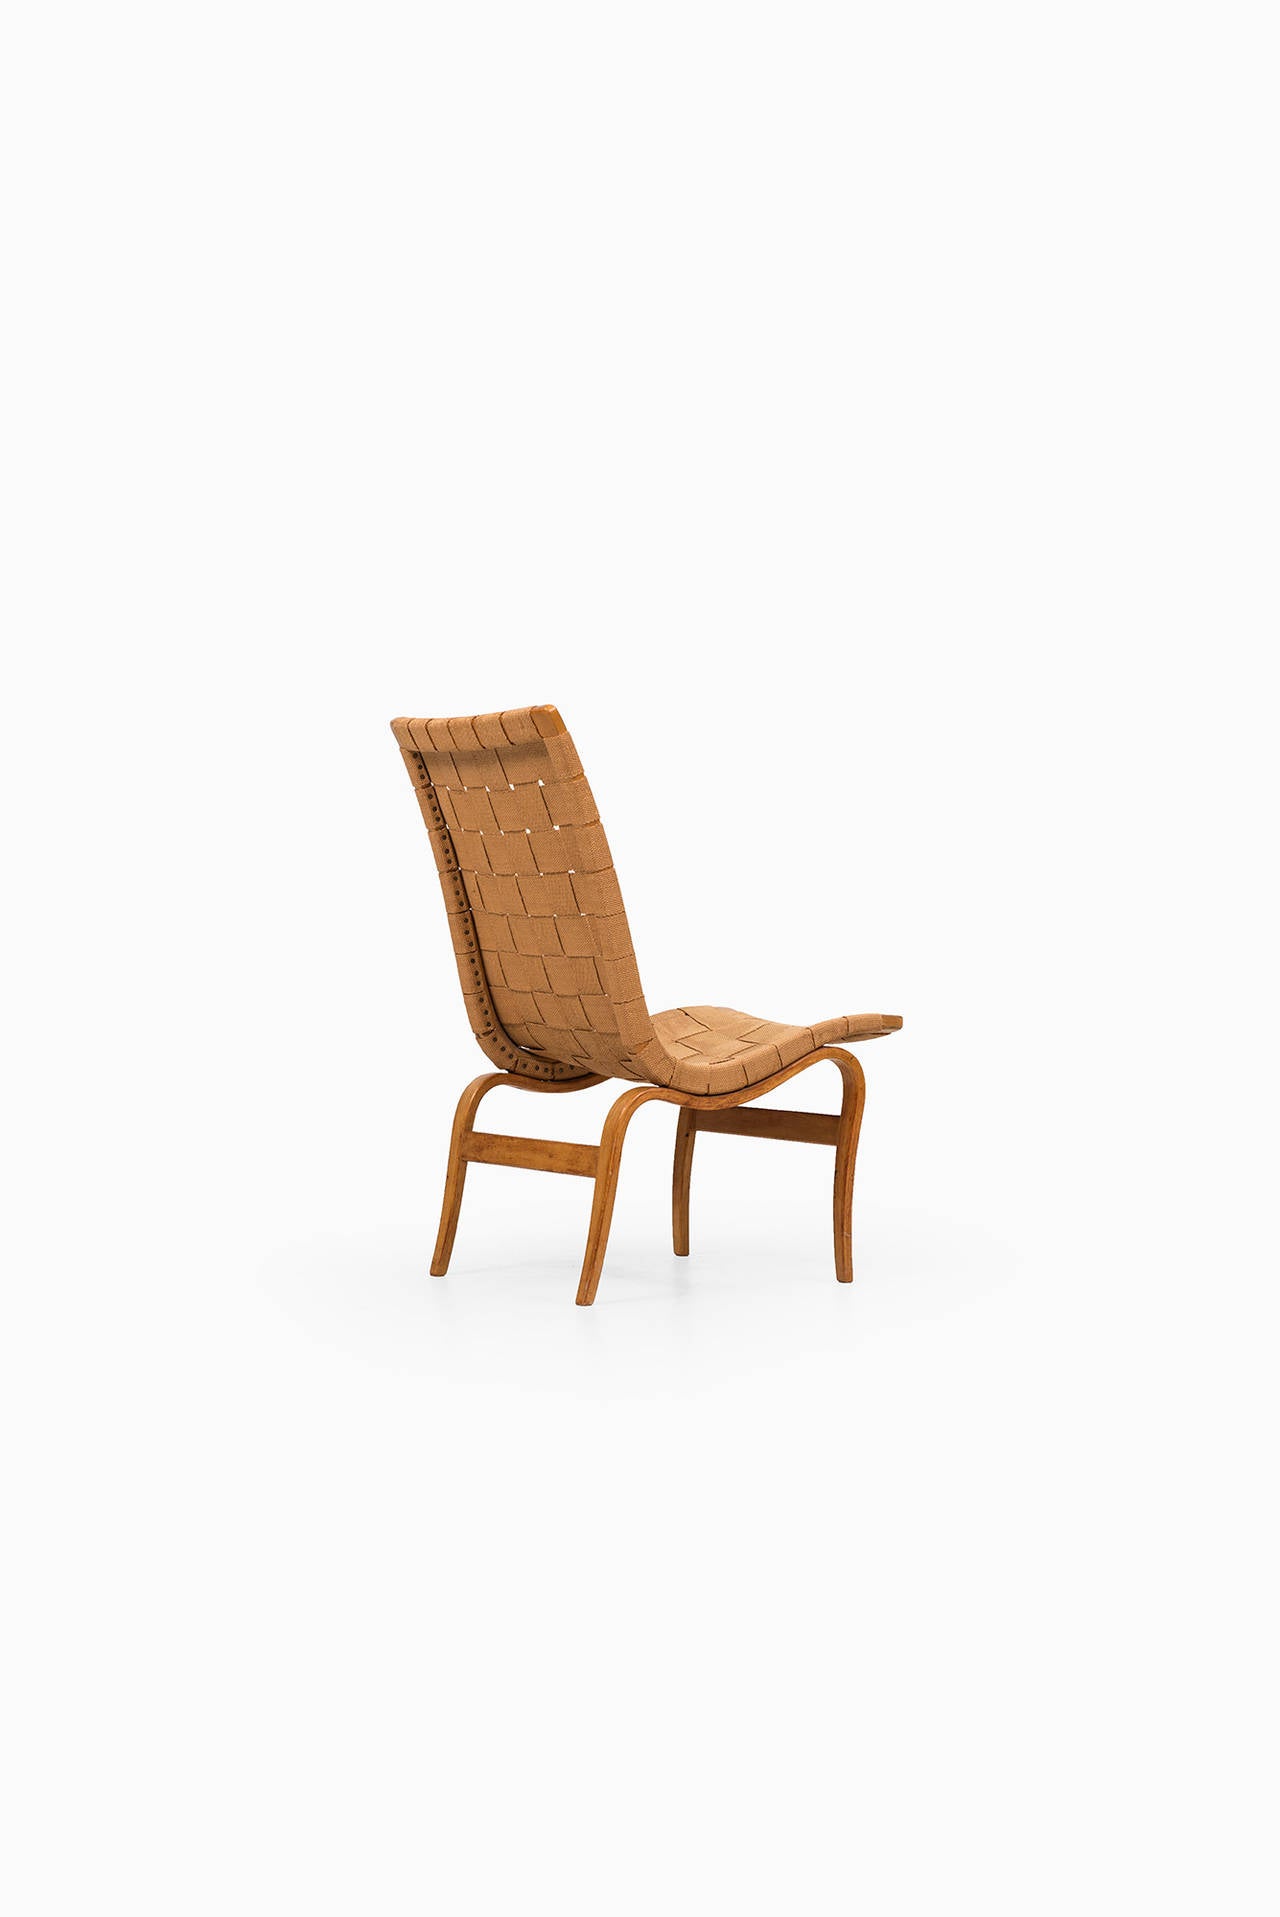 Mid-Century Modern Bruno Mathsson Easy Chair Produced by Karl Mathsson in Värnamo, Sweden